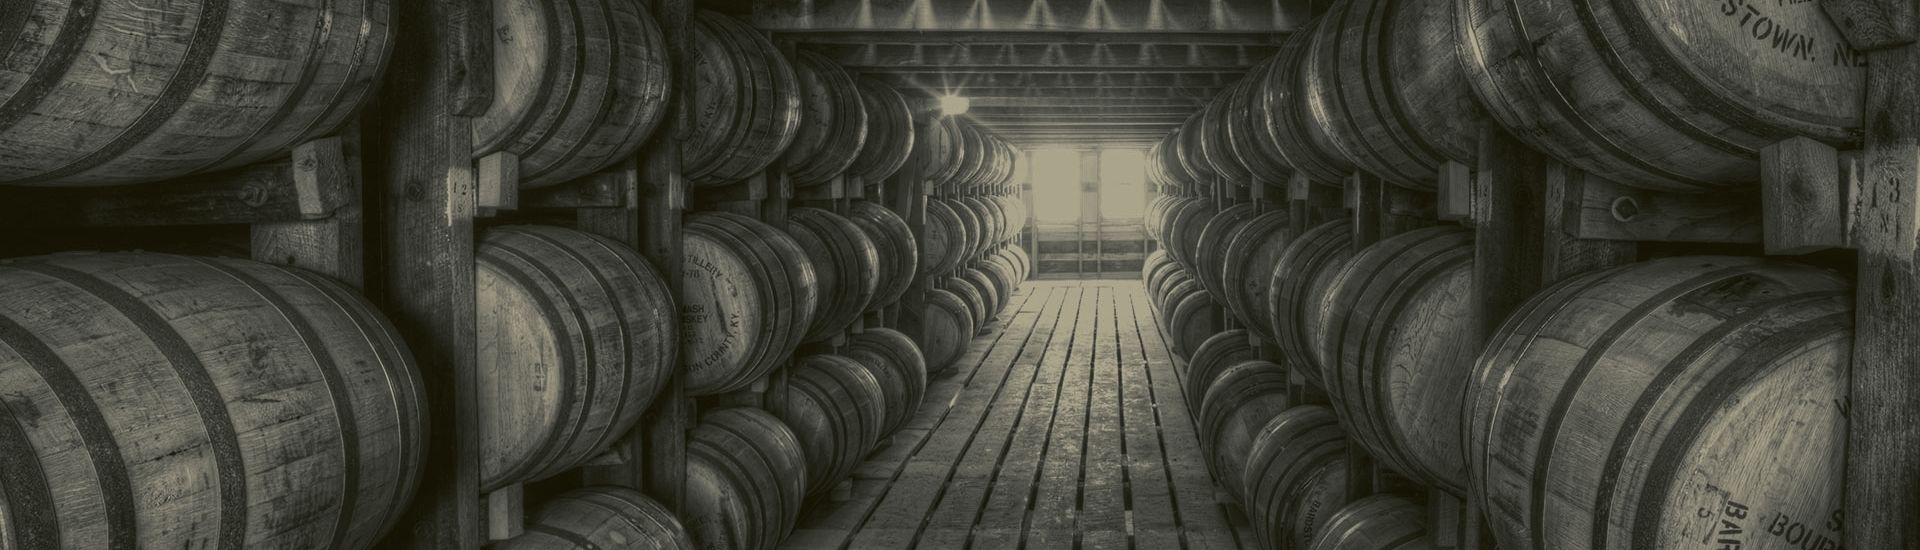 willett bourbon barrels